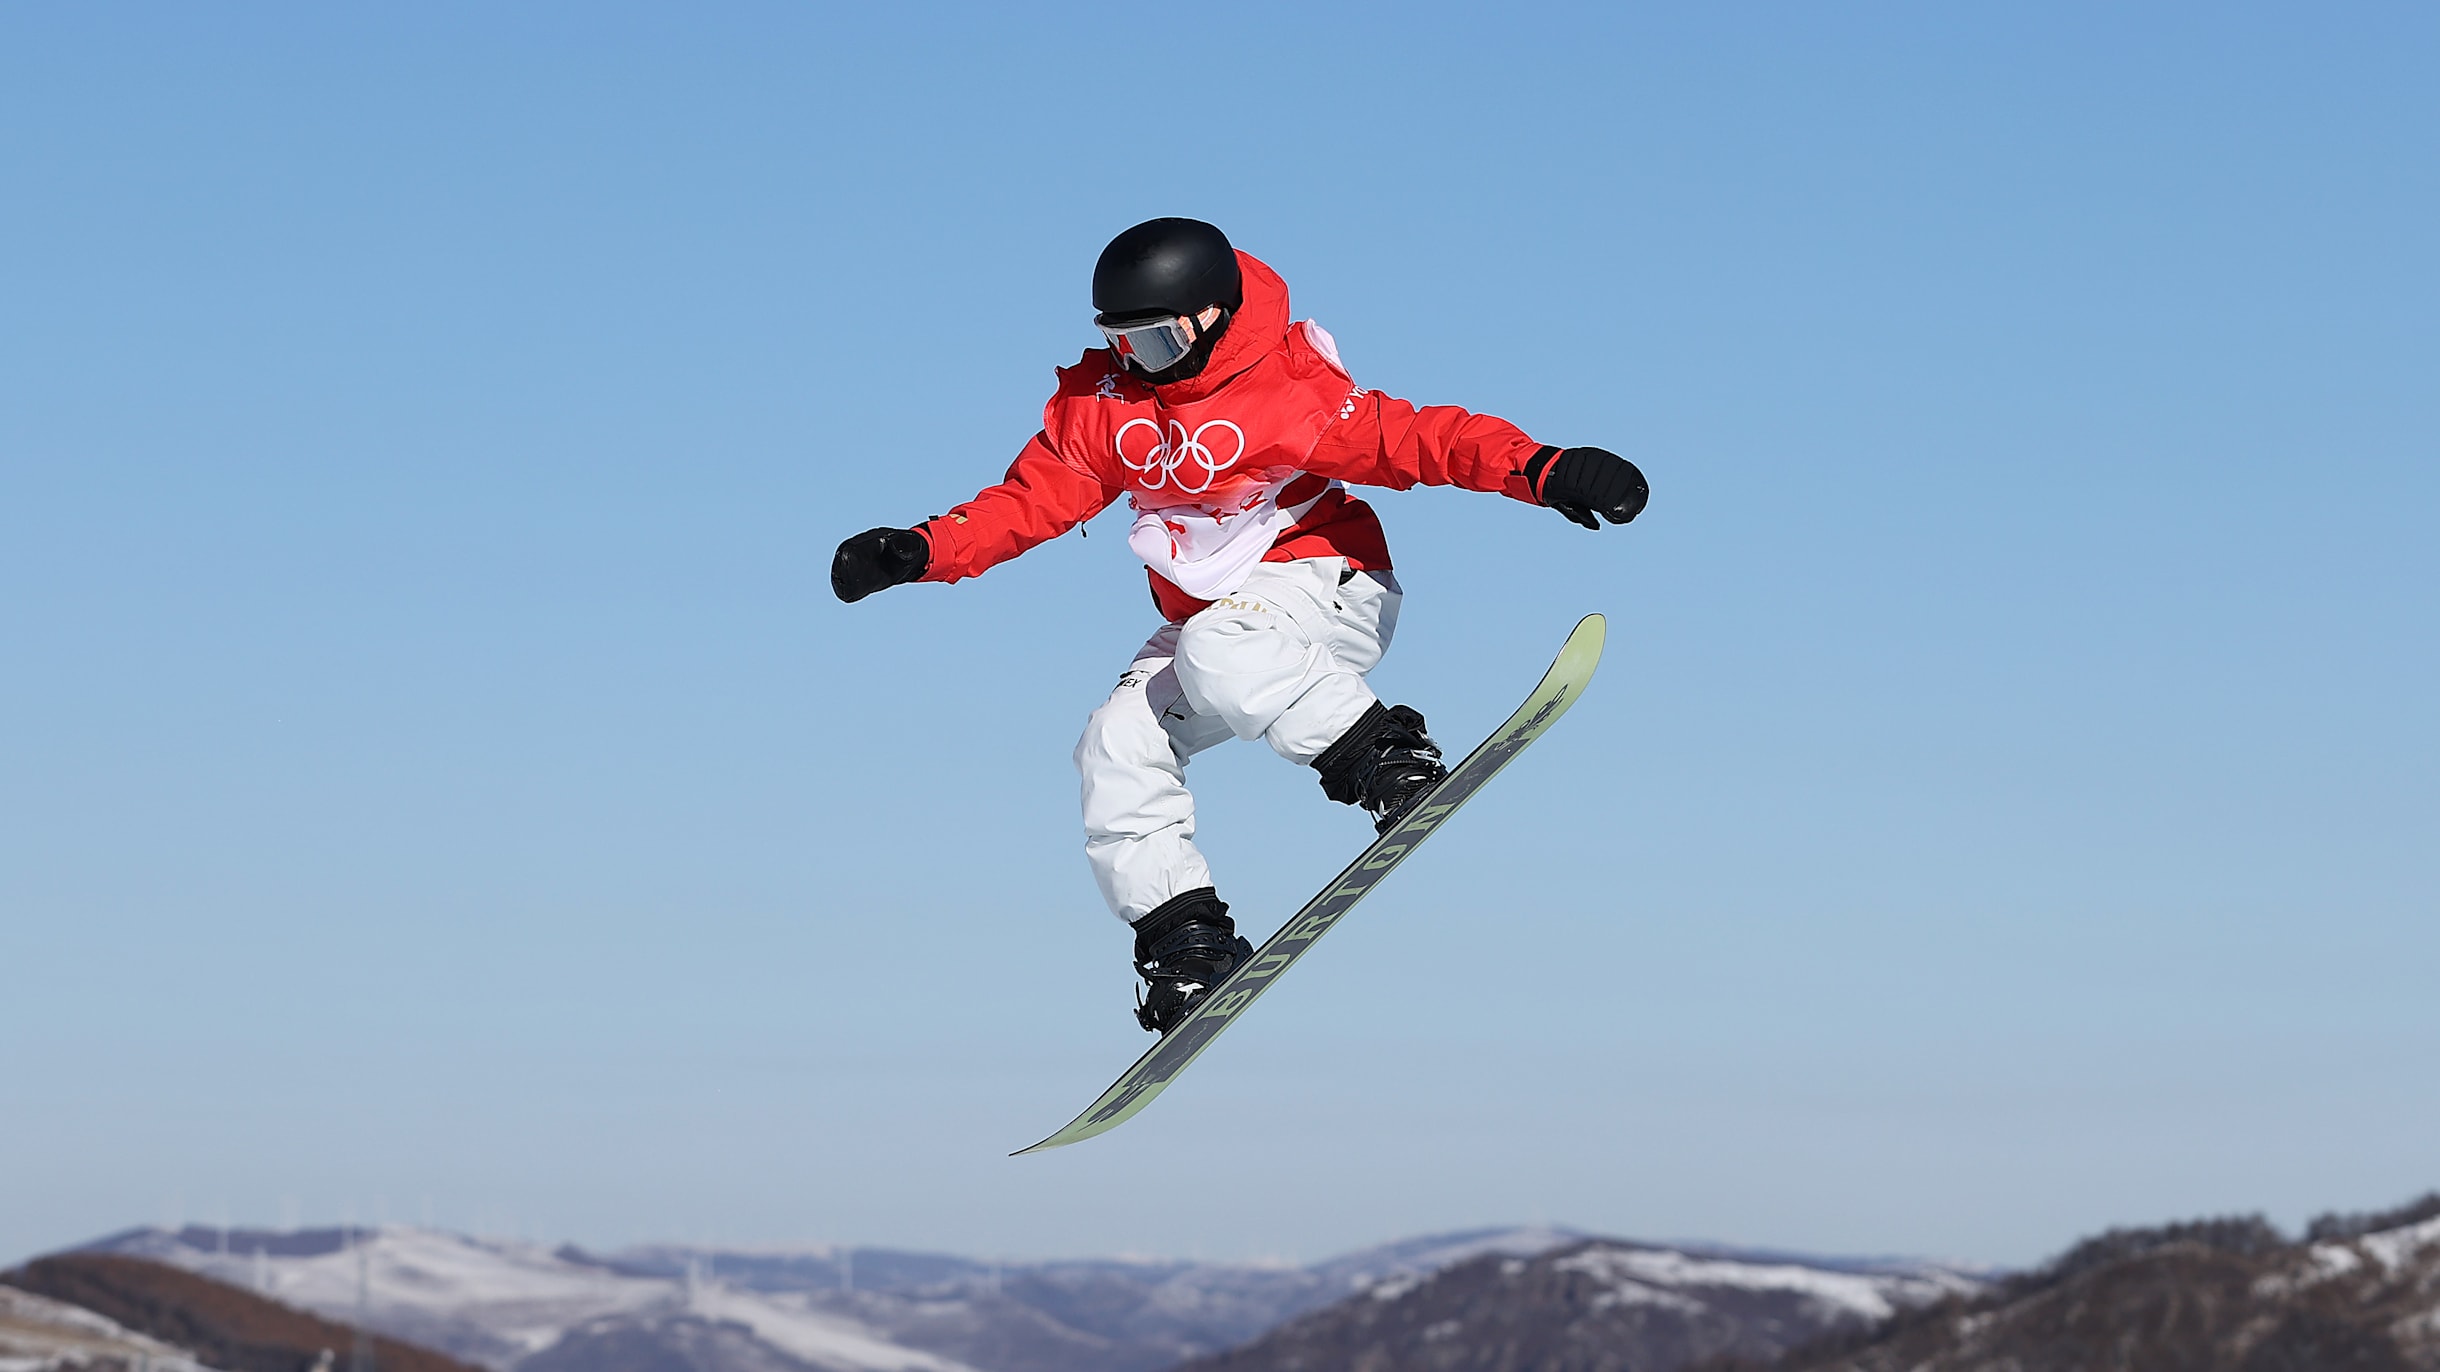 snowboarding olympics live